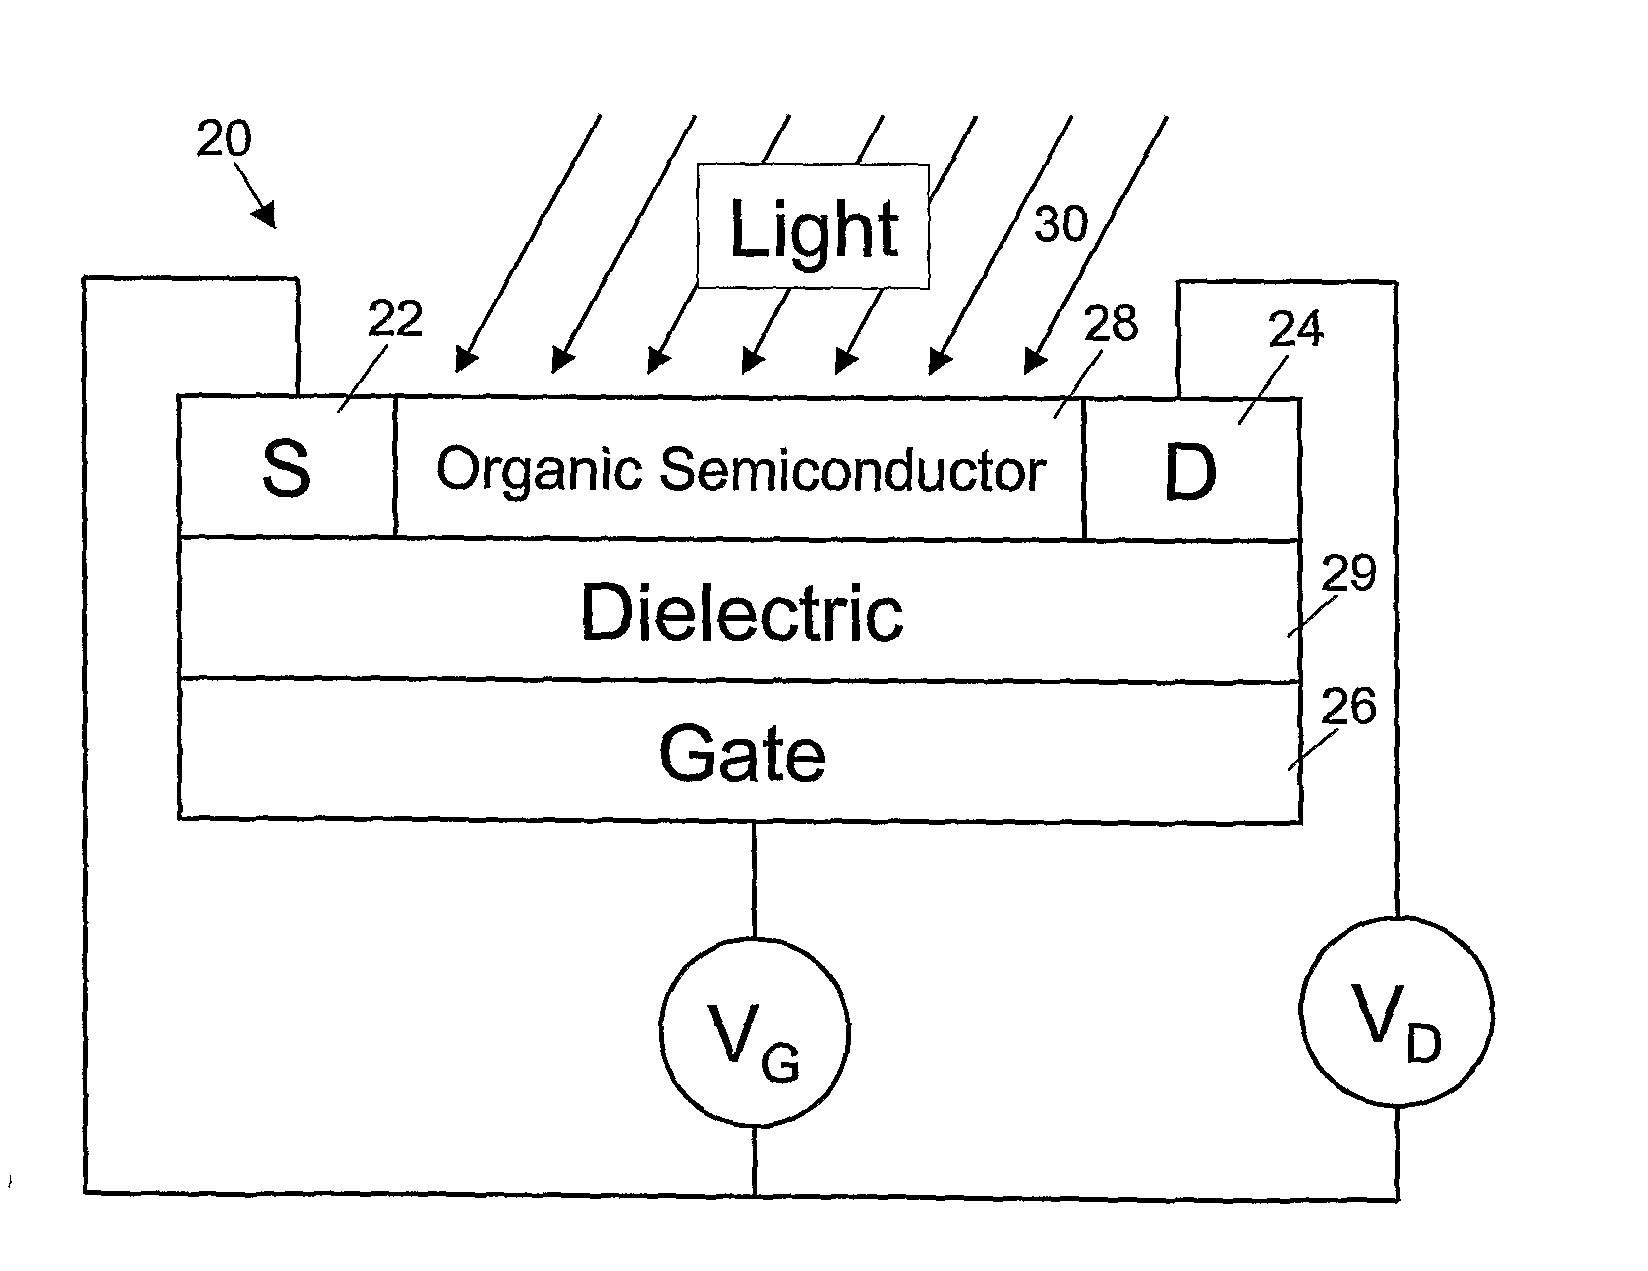 Organic field-effect transistors